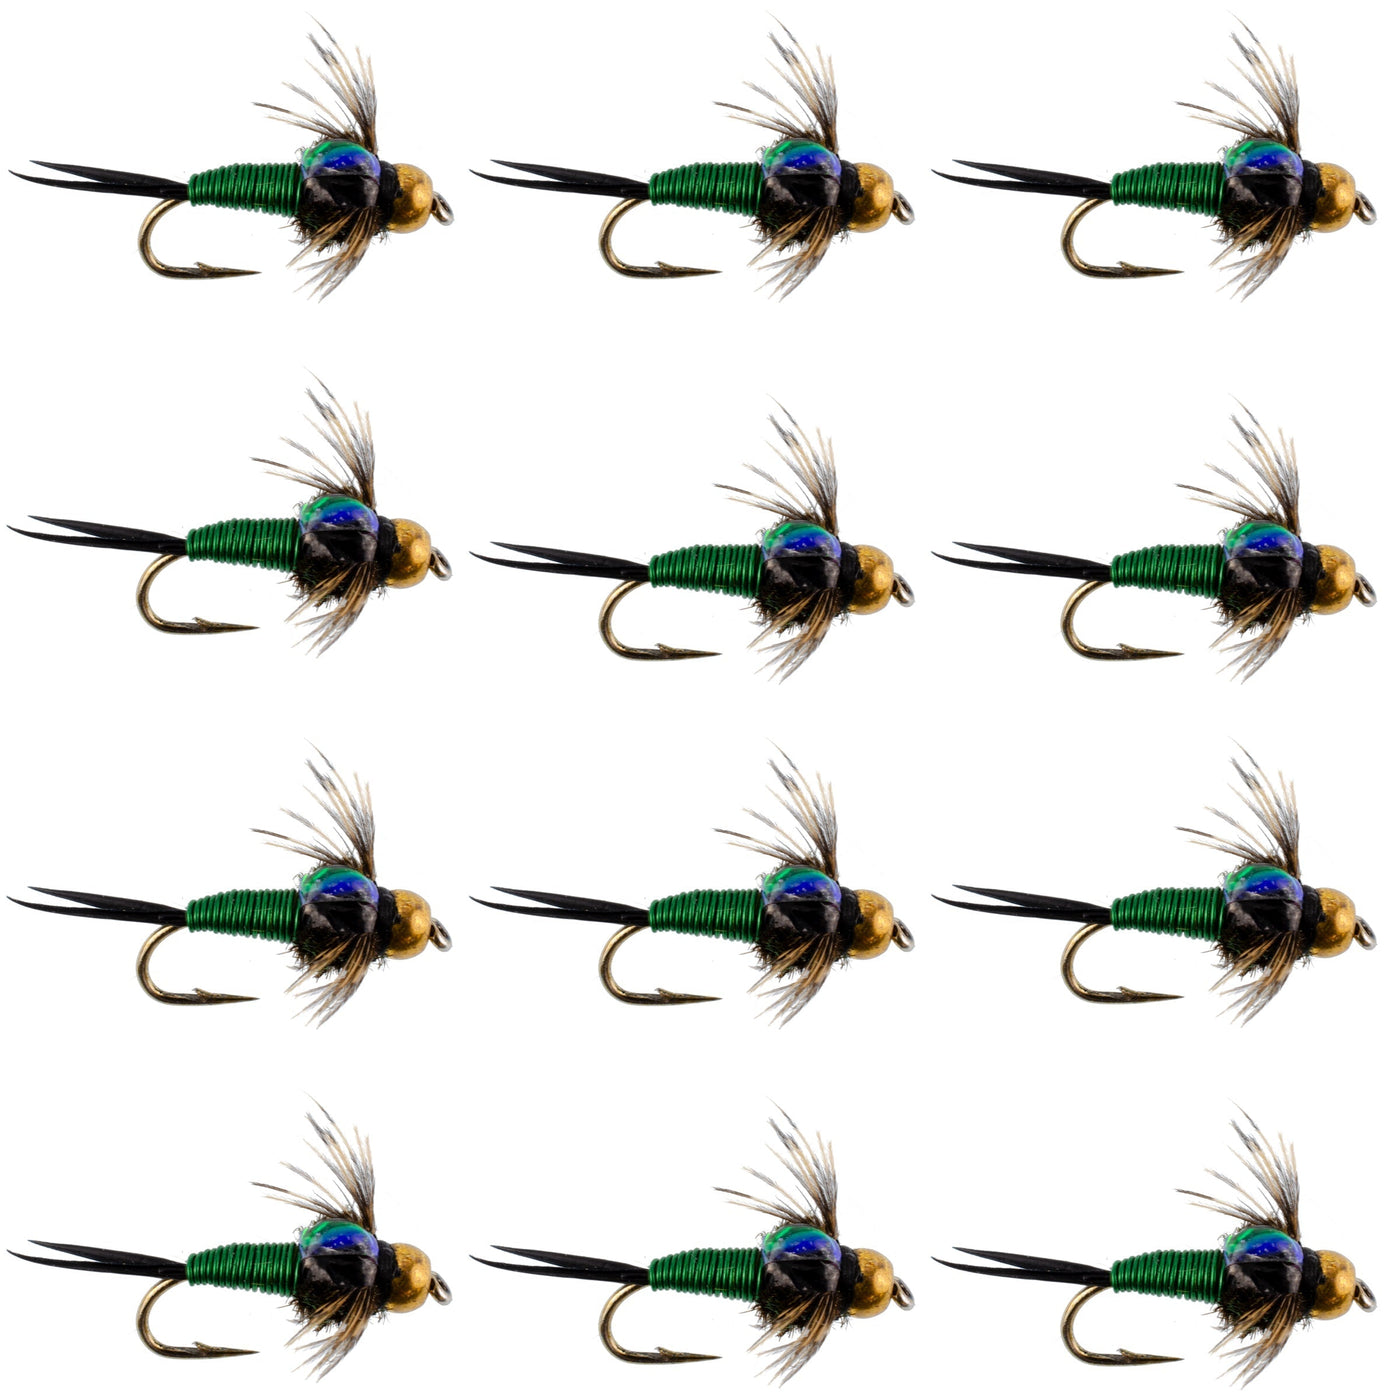 Bead Head Green Copper John Nymph Fly Fishing Flies - 1 Dozen Flies Hook Size 16